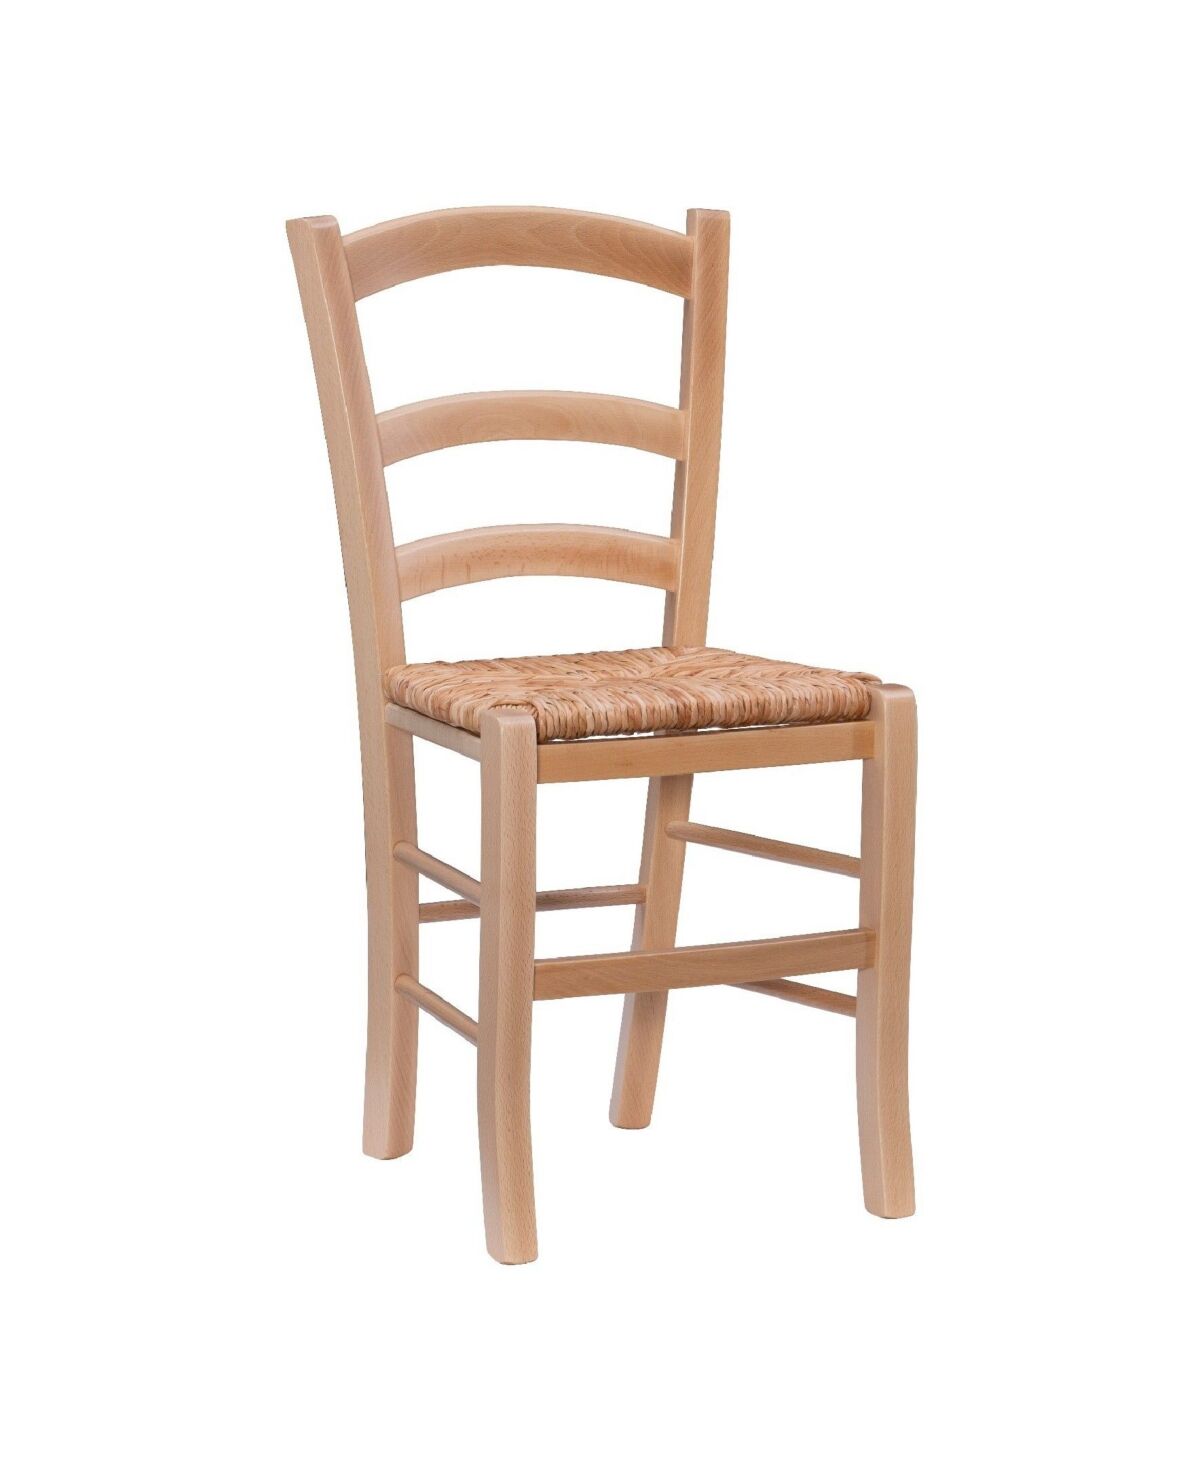 Linon Home Decor Gordana Side Chairs, Set of 2 - Natural